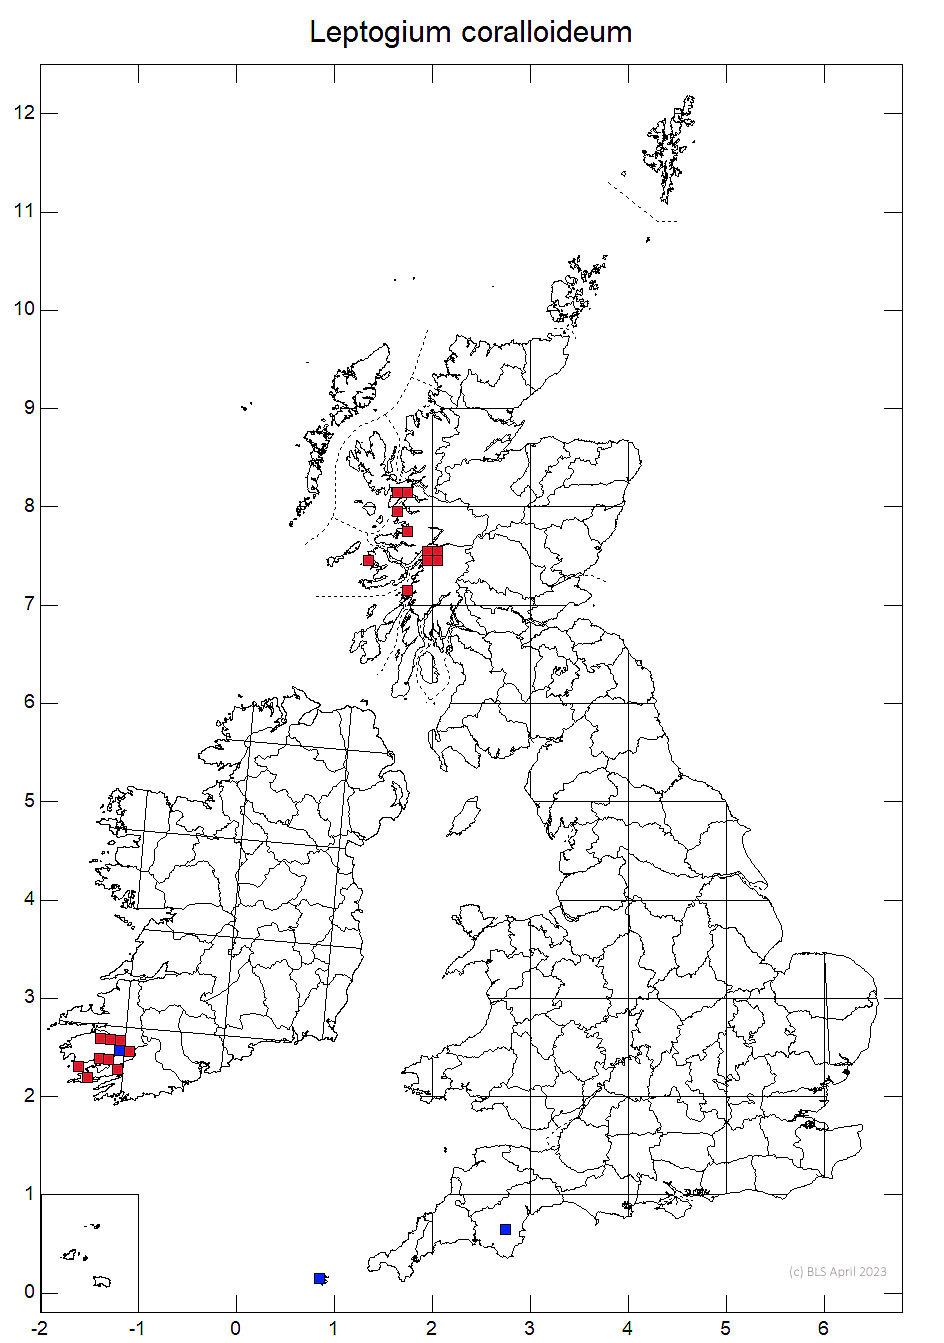 Leptogium coralloideum 10km sq distribution map